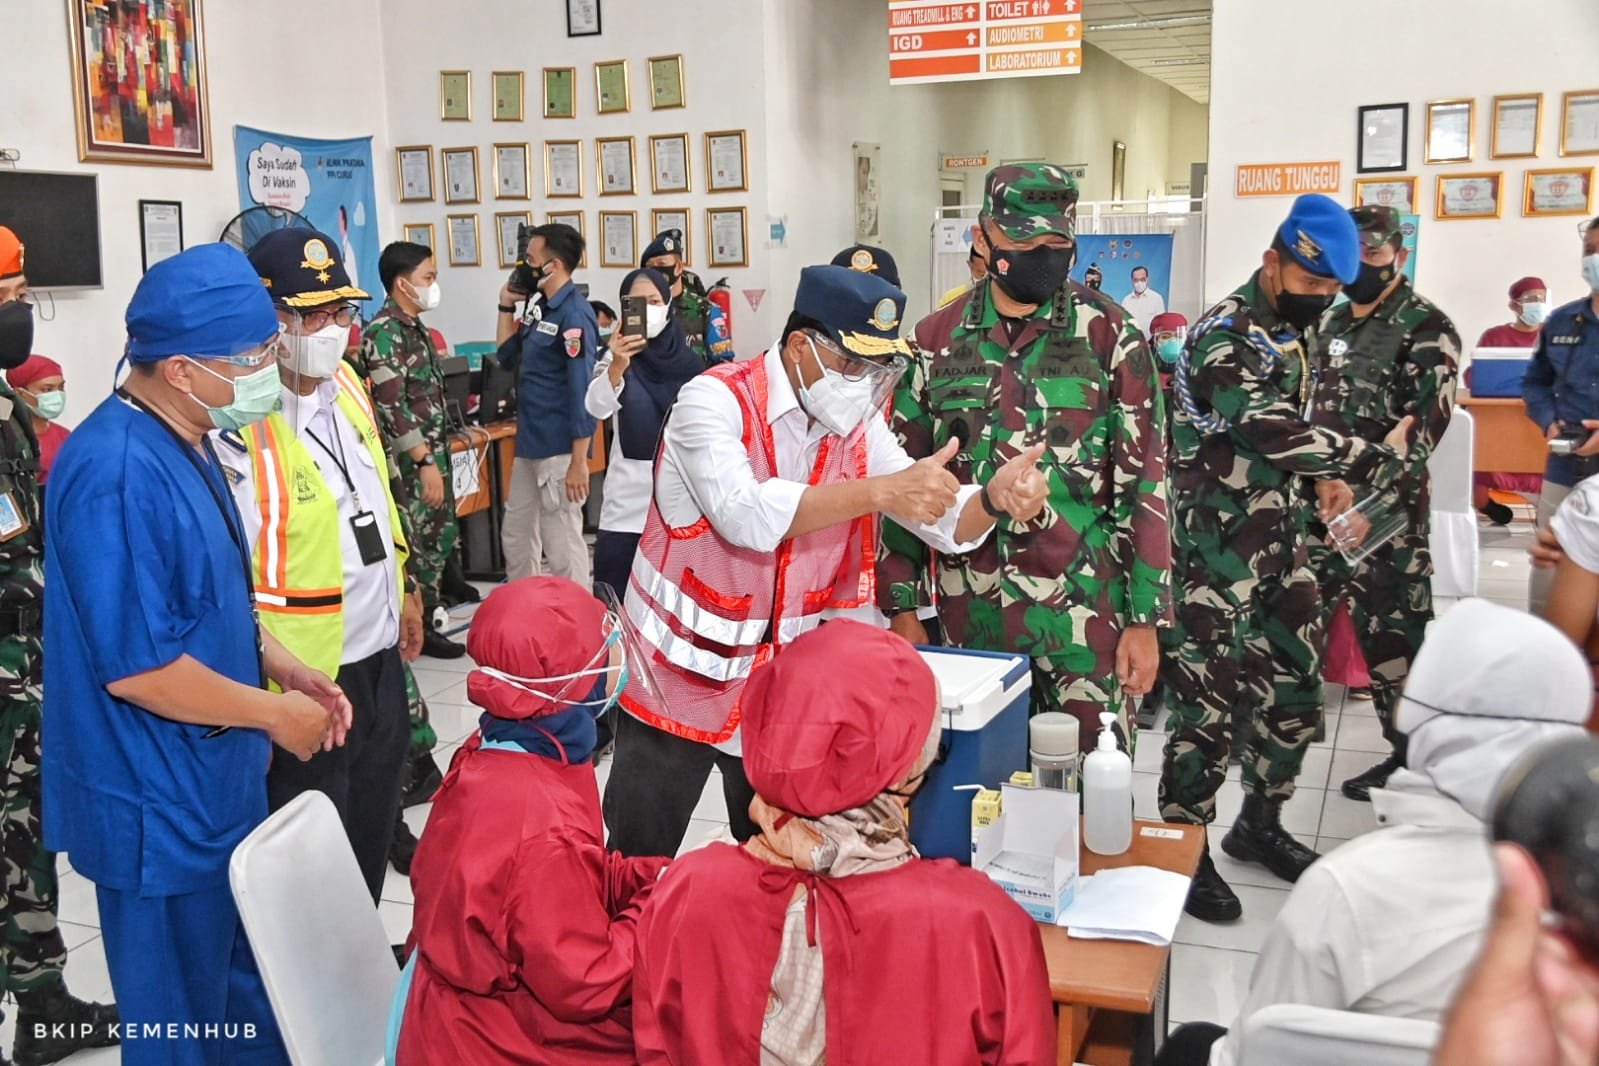 Kemenhub Berkolaborasi Dengan TNI AU Gelar Vaksinasi di Sekolah-Sekolah Transportasi